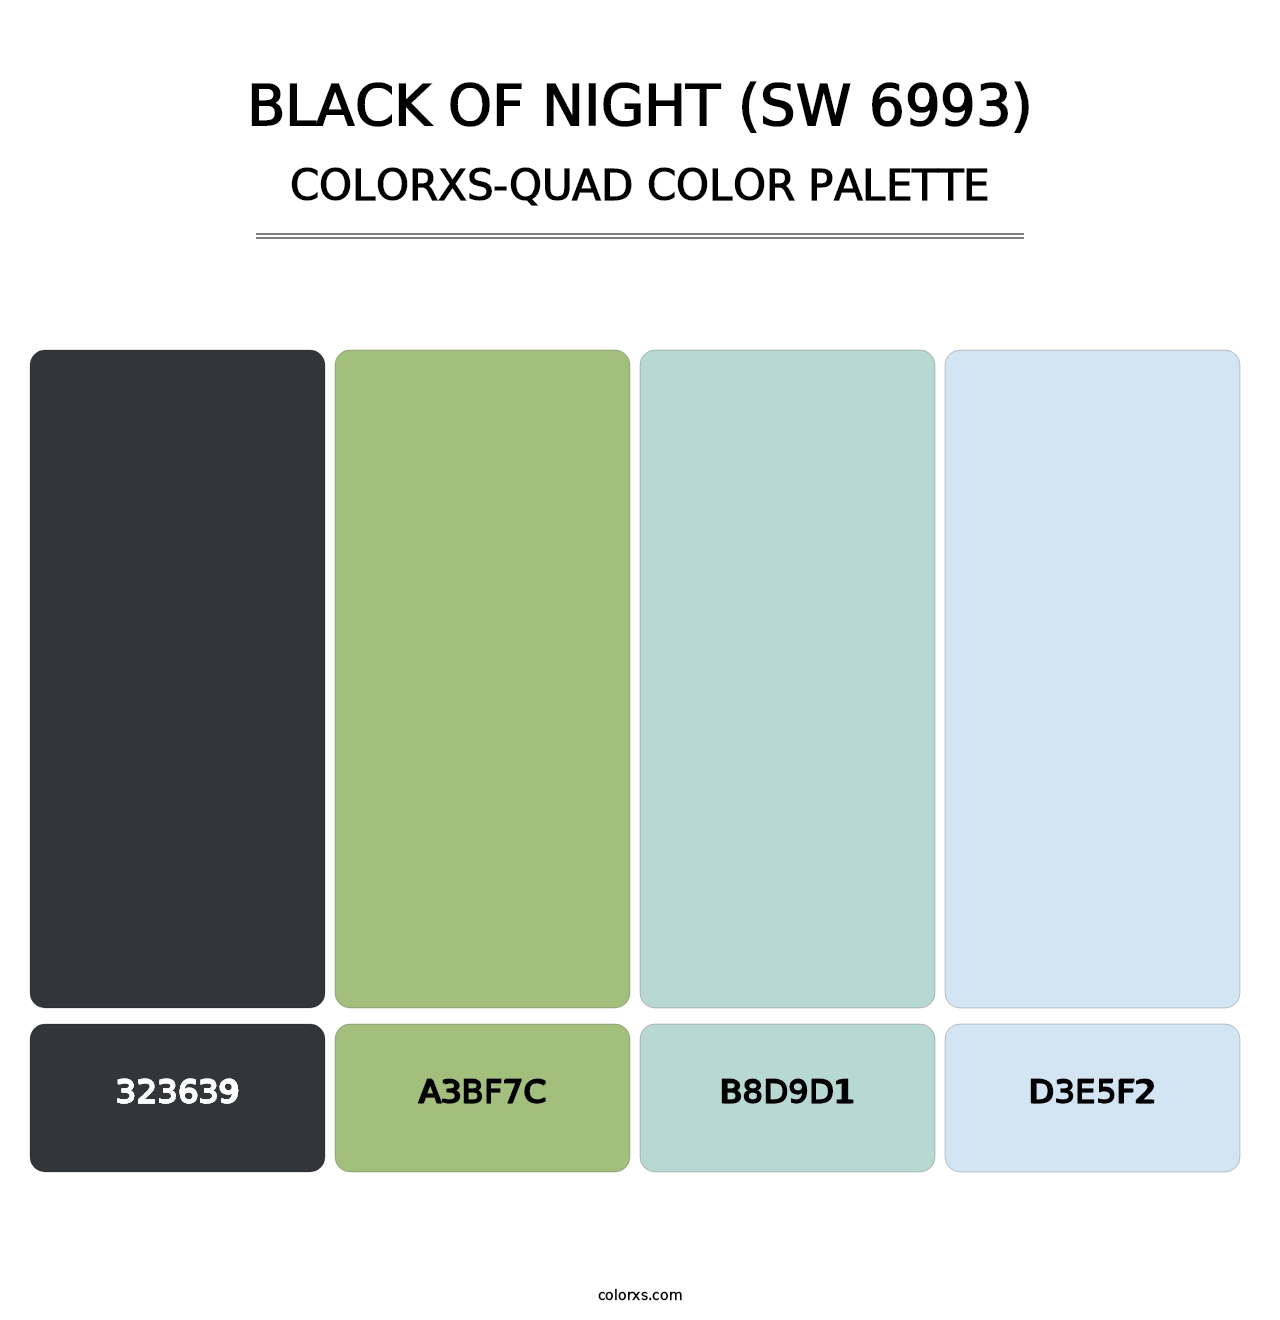 Black of Night (SW 6993) - Colorxs Quad Palette